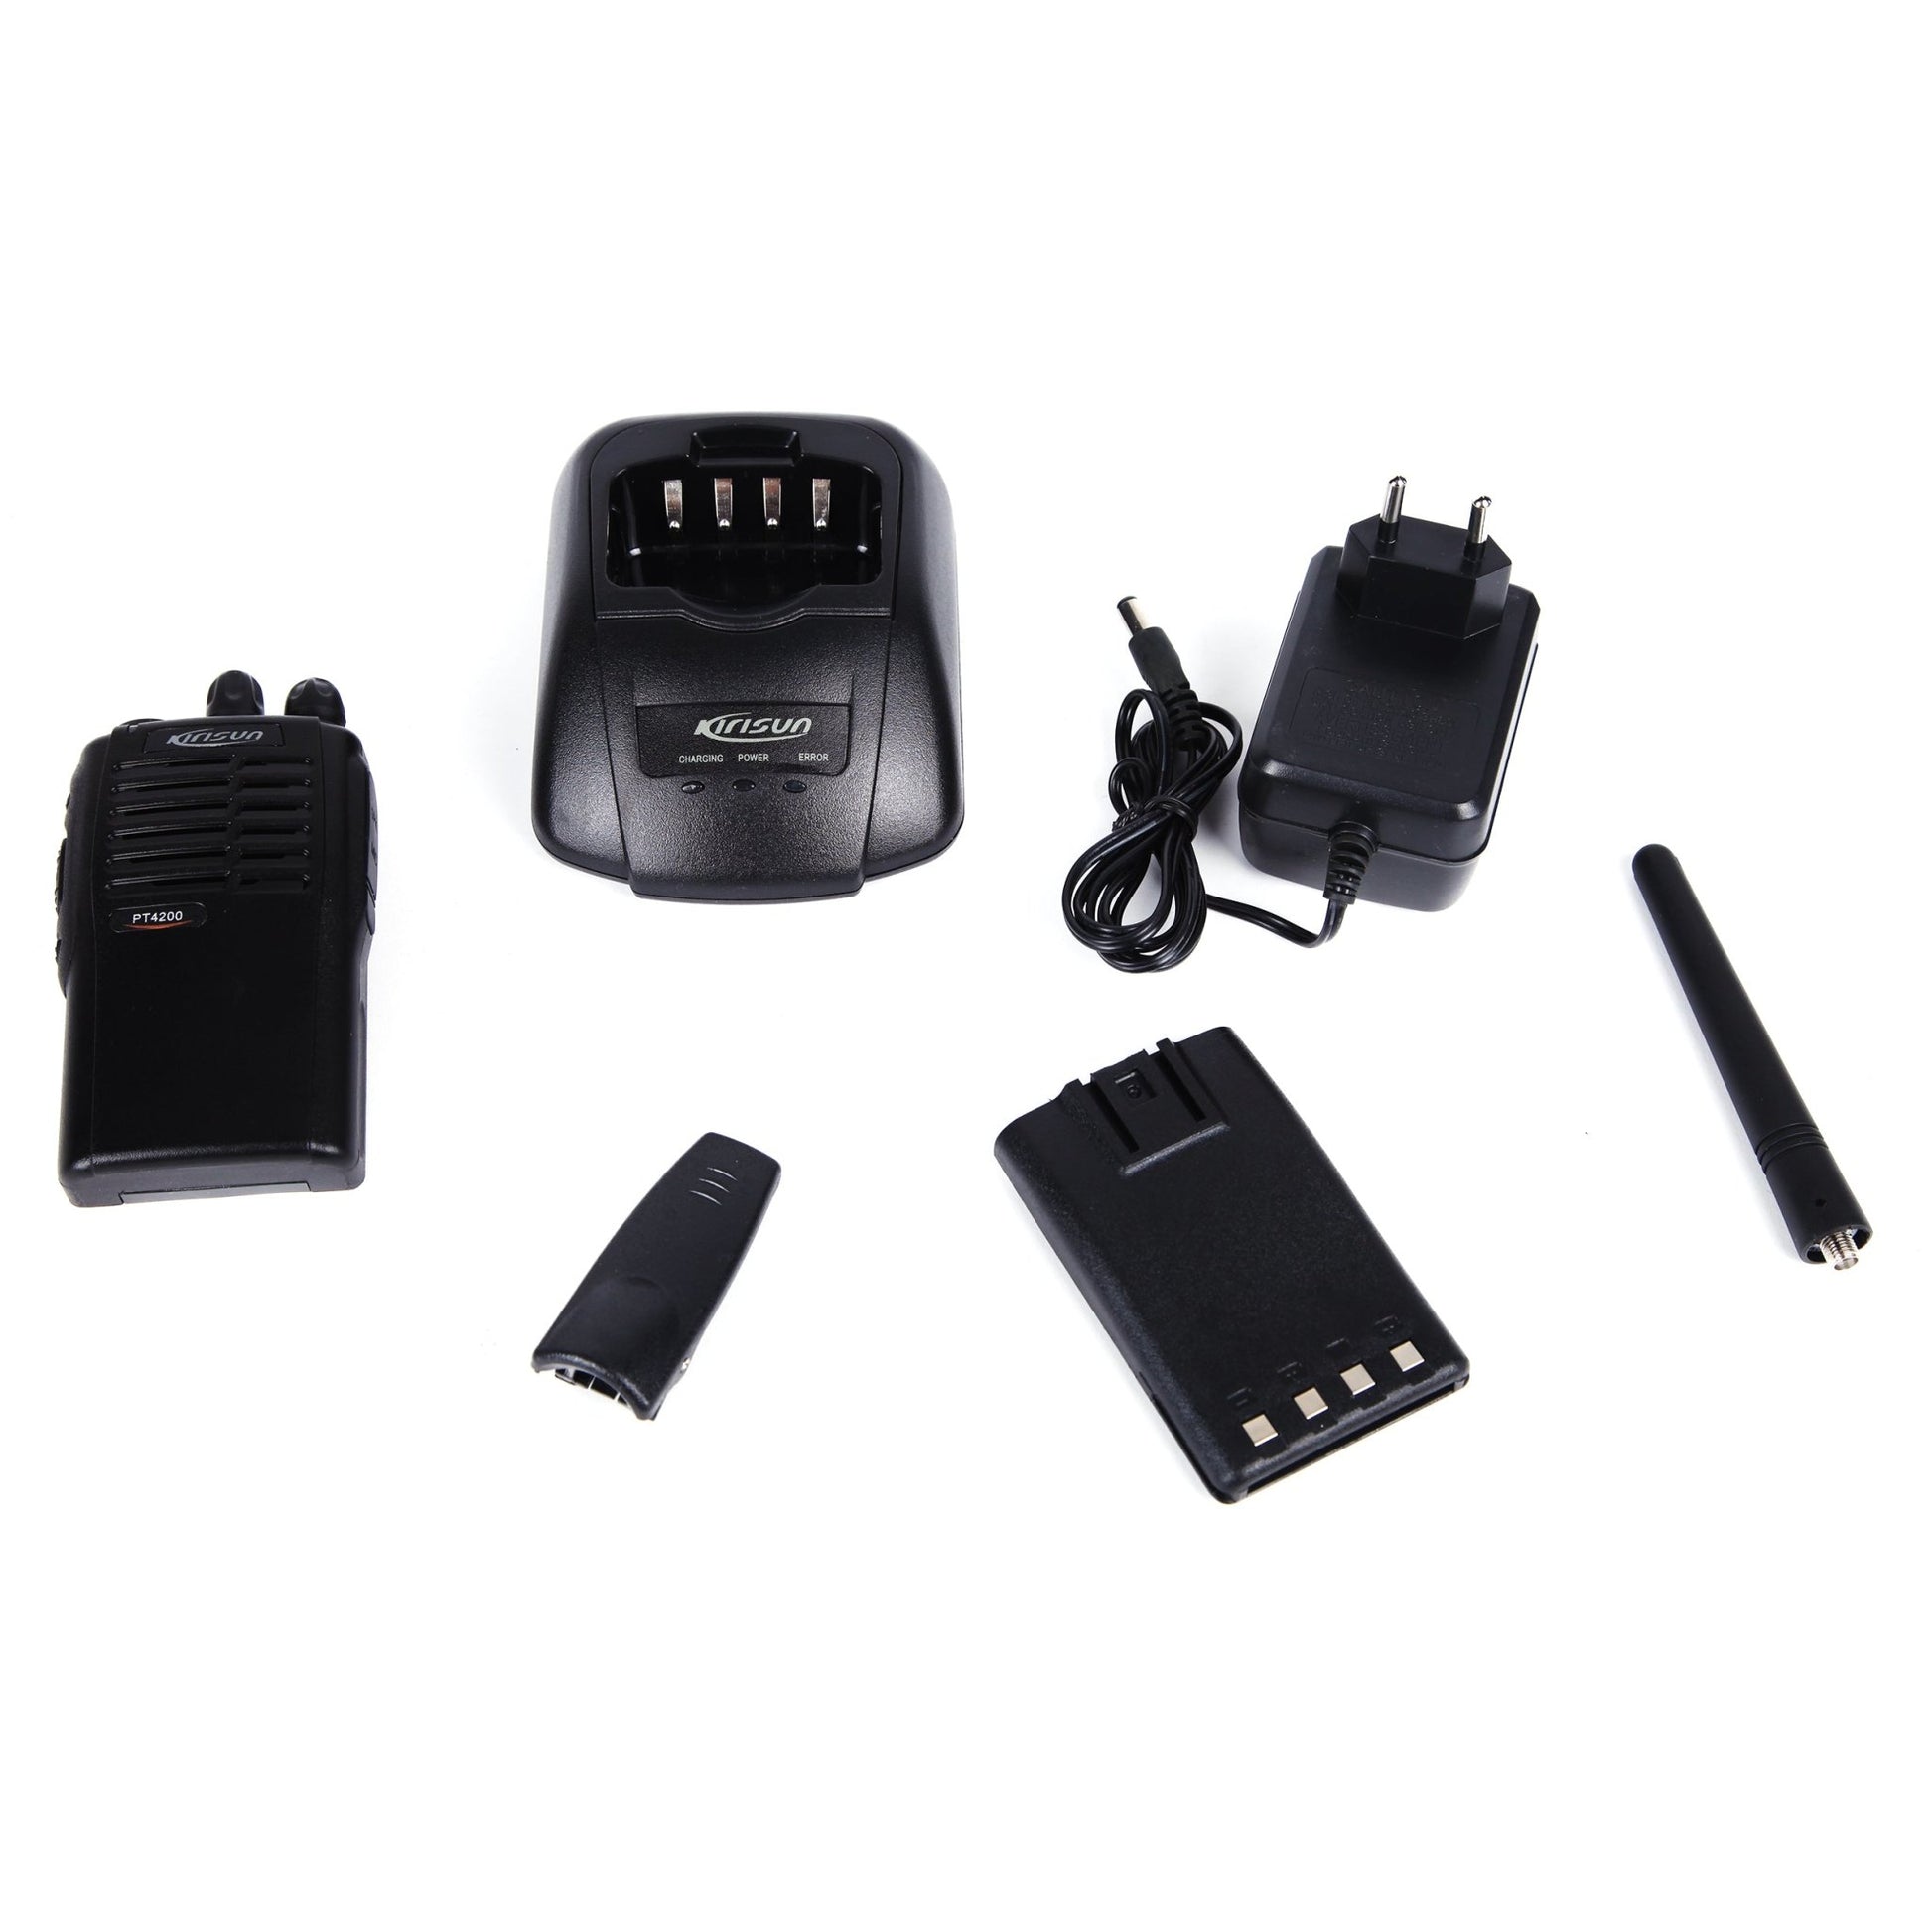 Kirisun 5W PT4200 UHF walkie-talkie Portable Handheld Civilian Two Way Radio Black 3-10km - Edragonmall.com